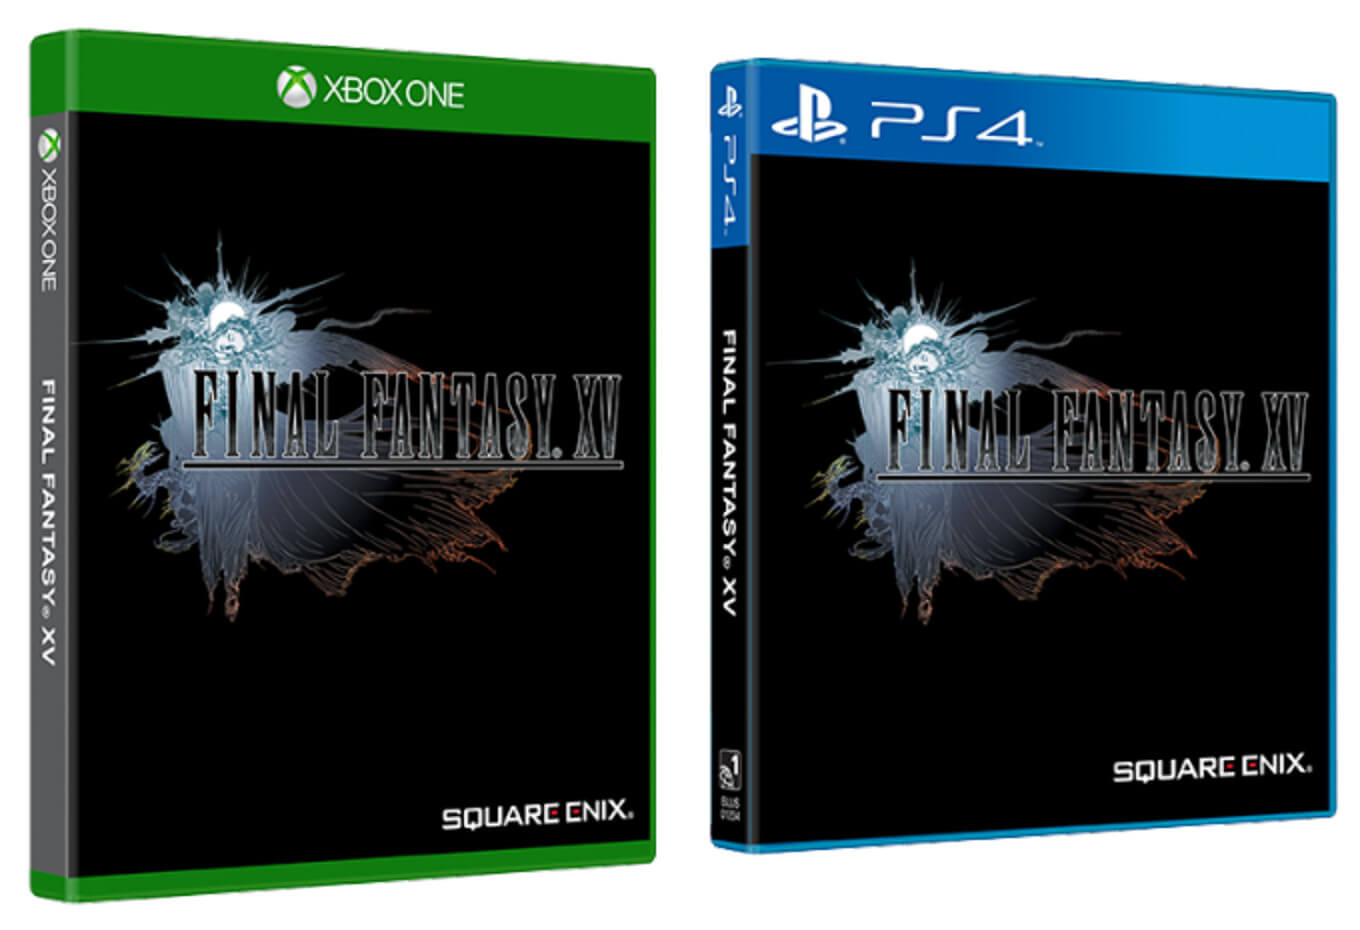 Capa reversivel de Final Fantasy XV